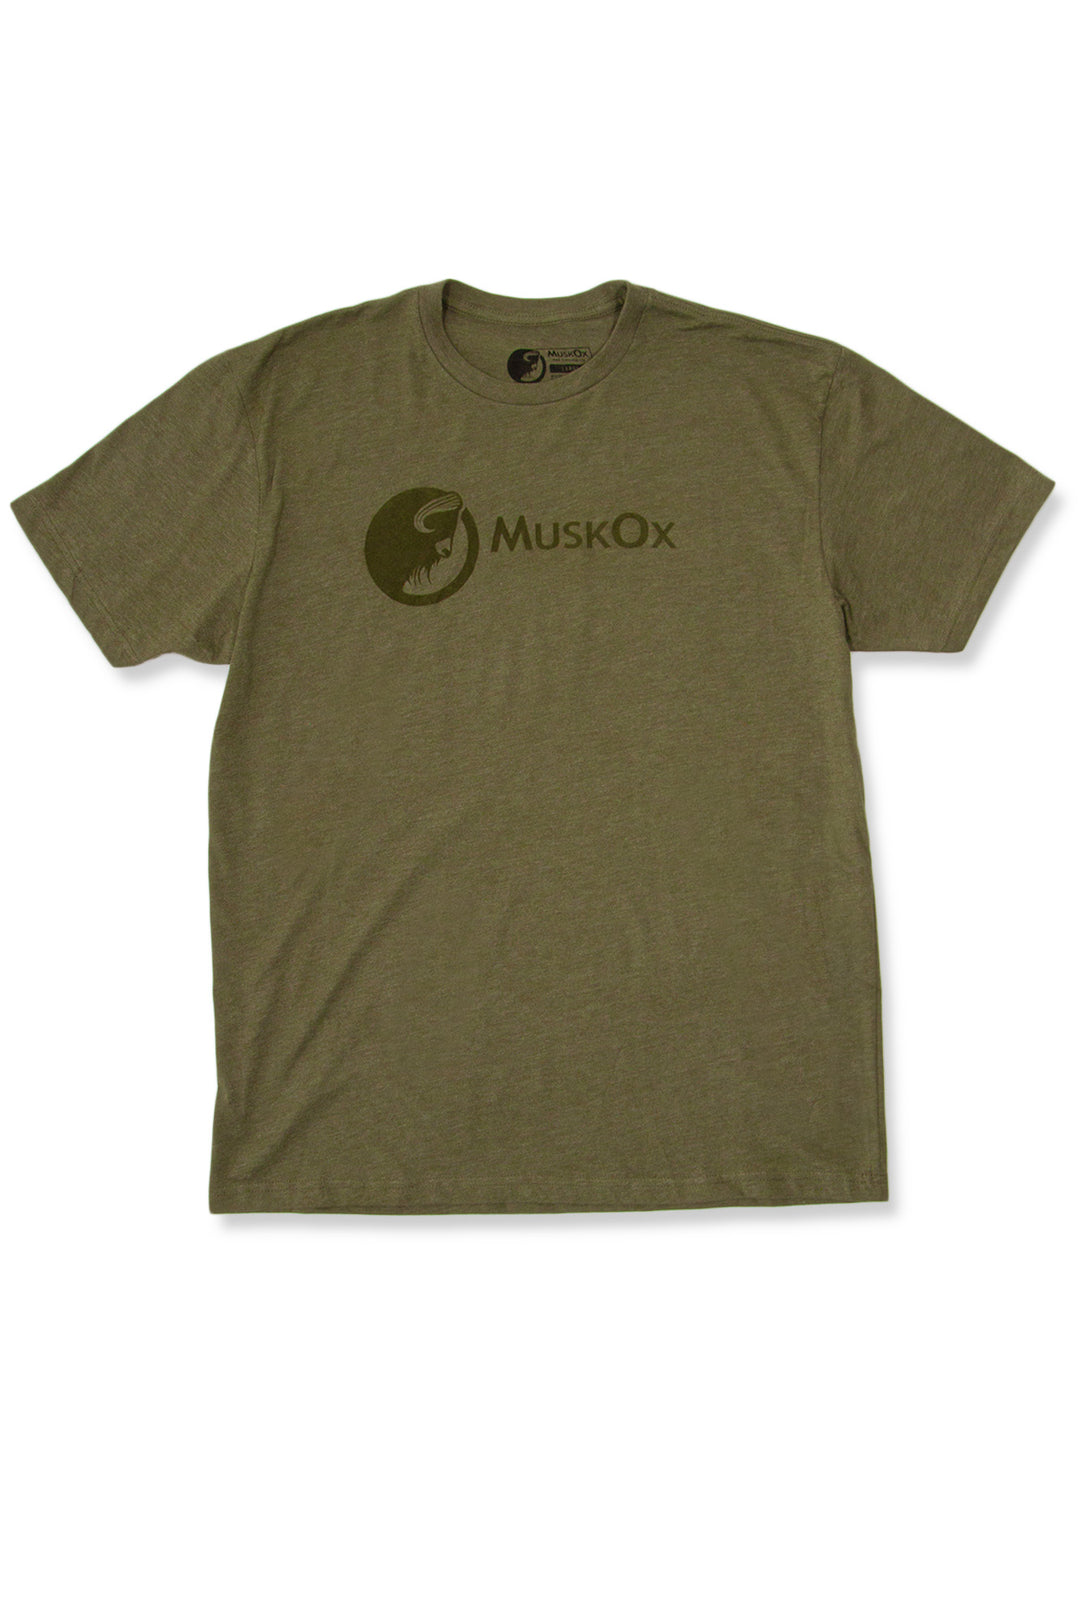 MuskOx Outdoor Apparel Military Green Logo Tee